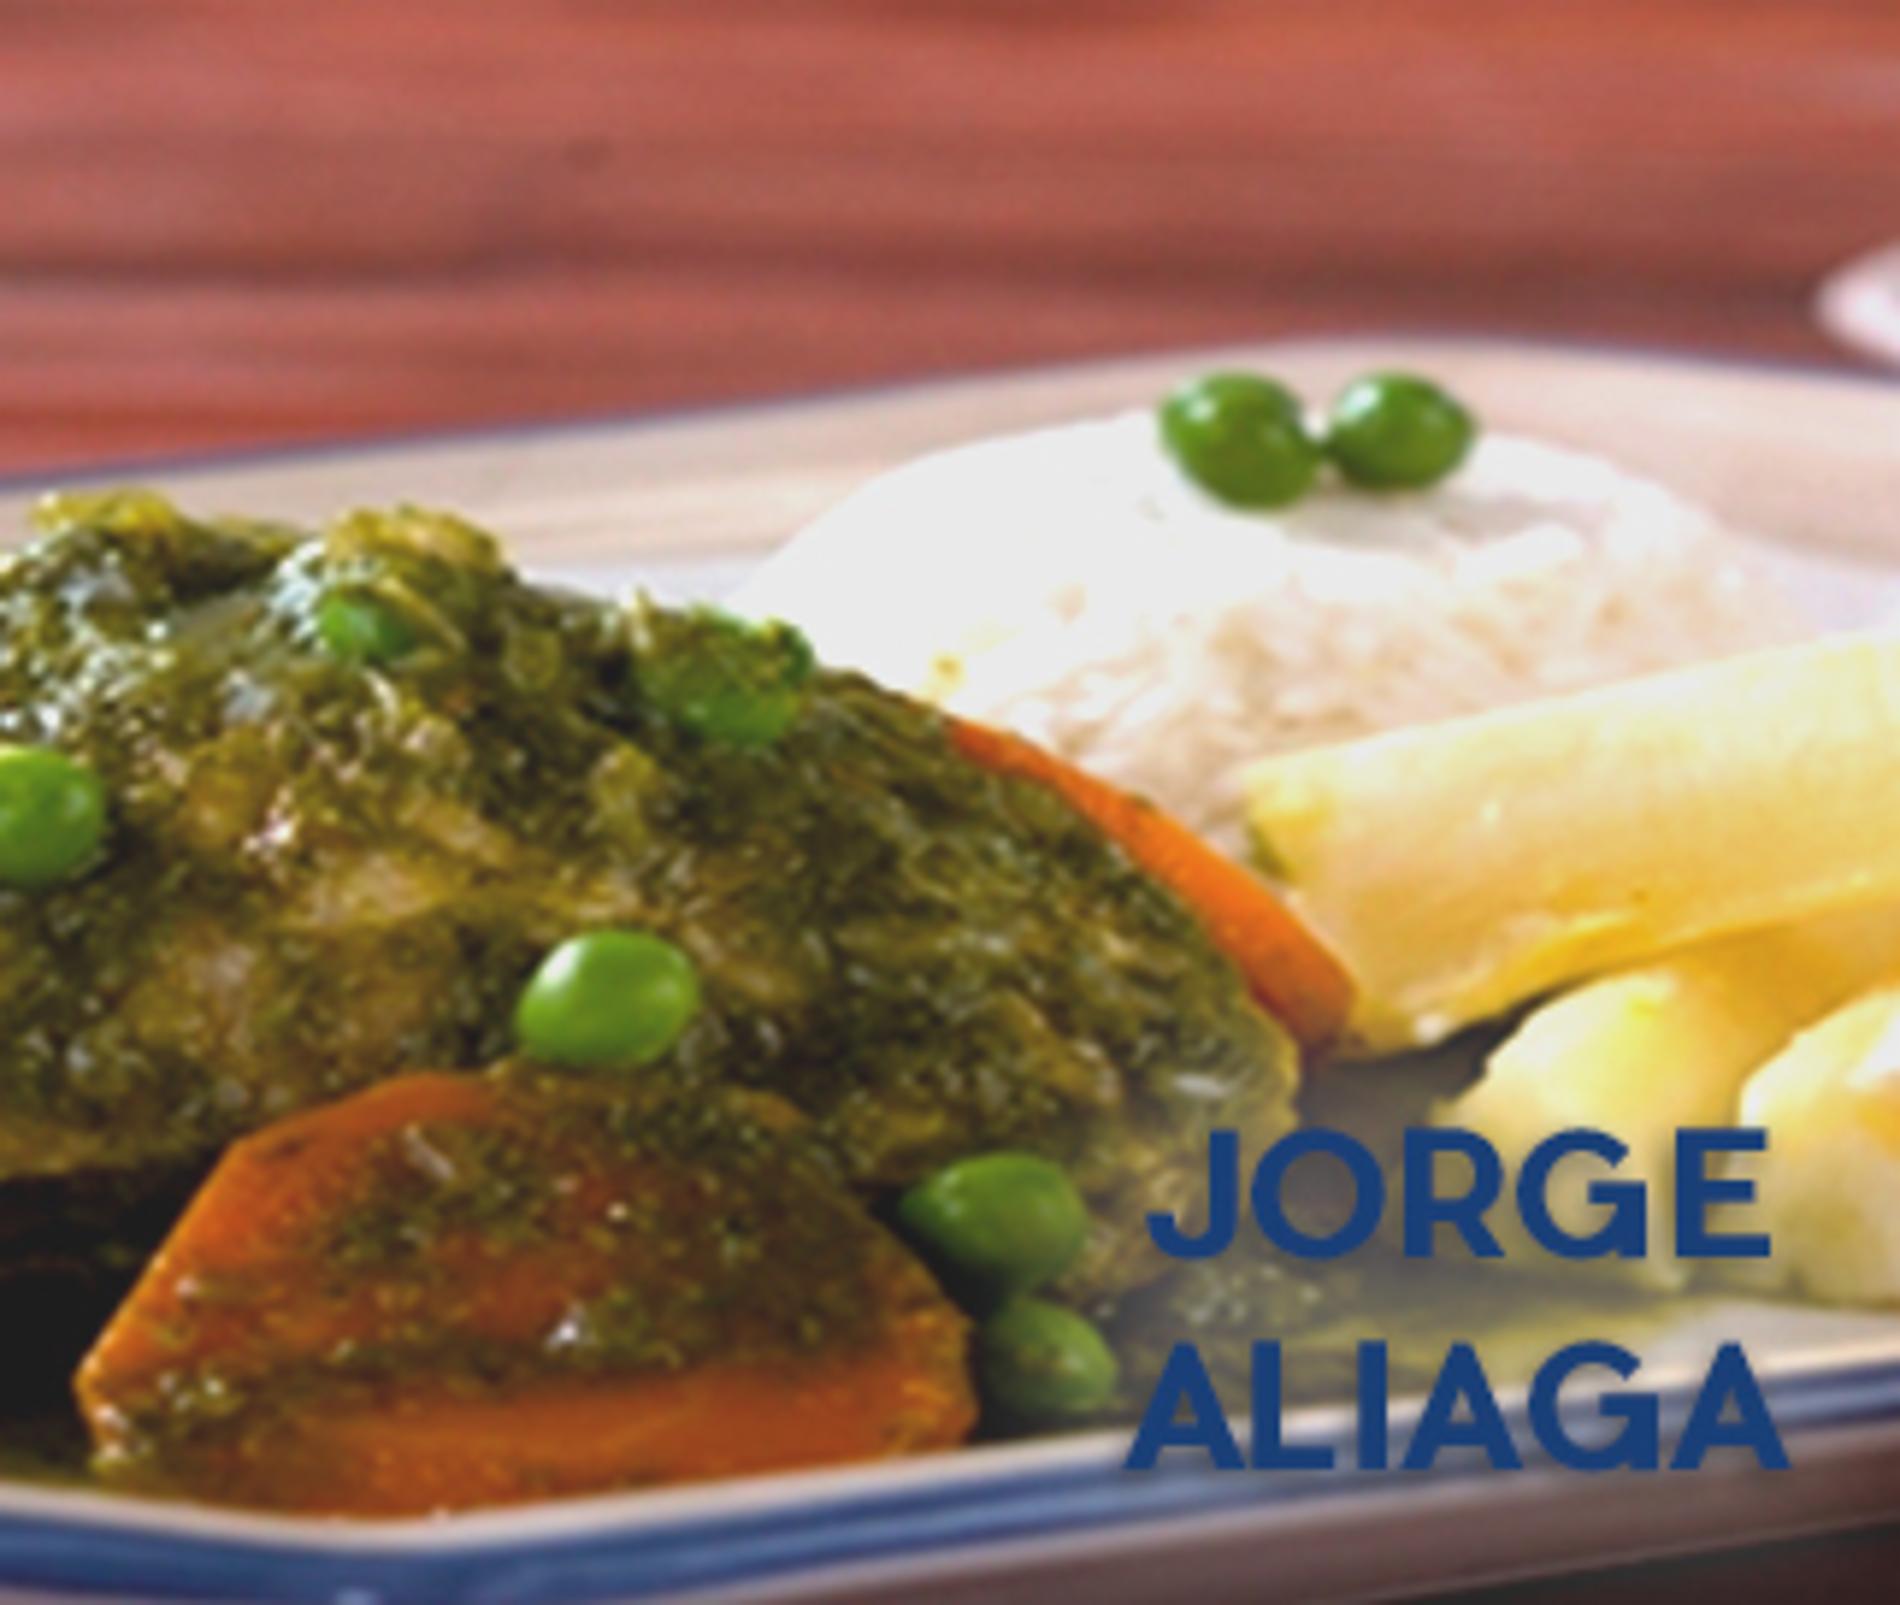 Receta de Pollo al huacatay de Jorge Aliaga